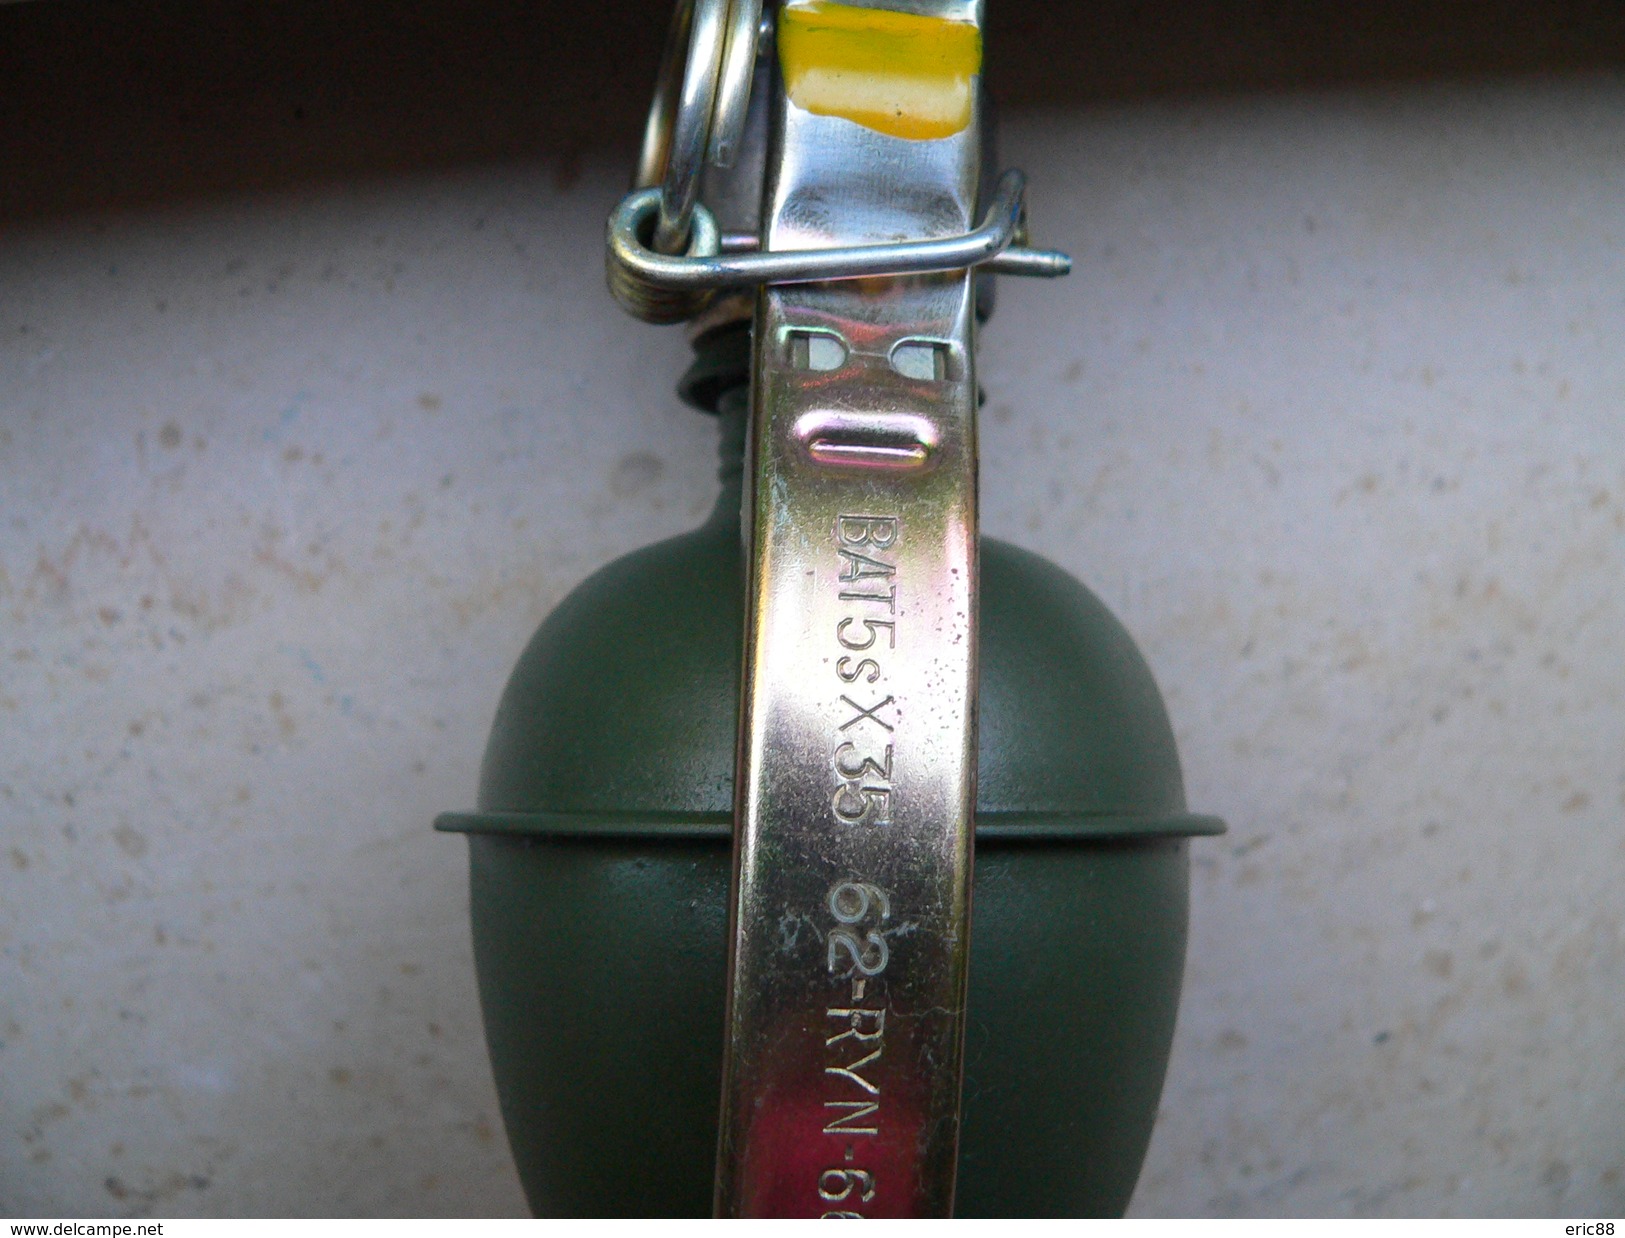 Grenade OFX37 avec bouchon allumeur 35 neutralisée